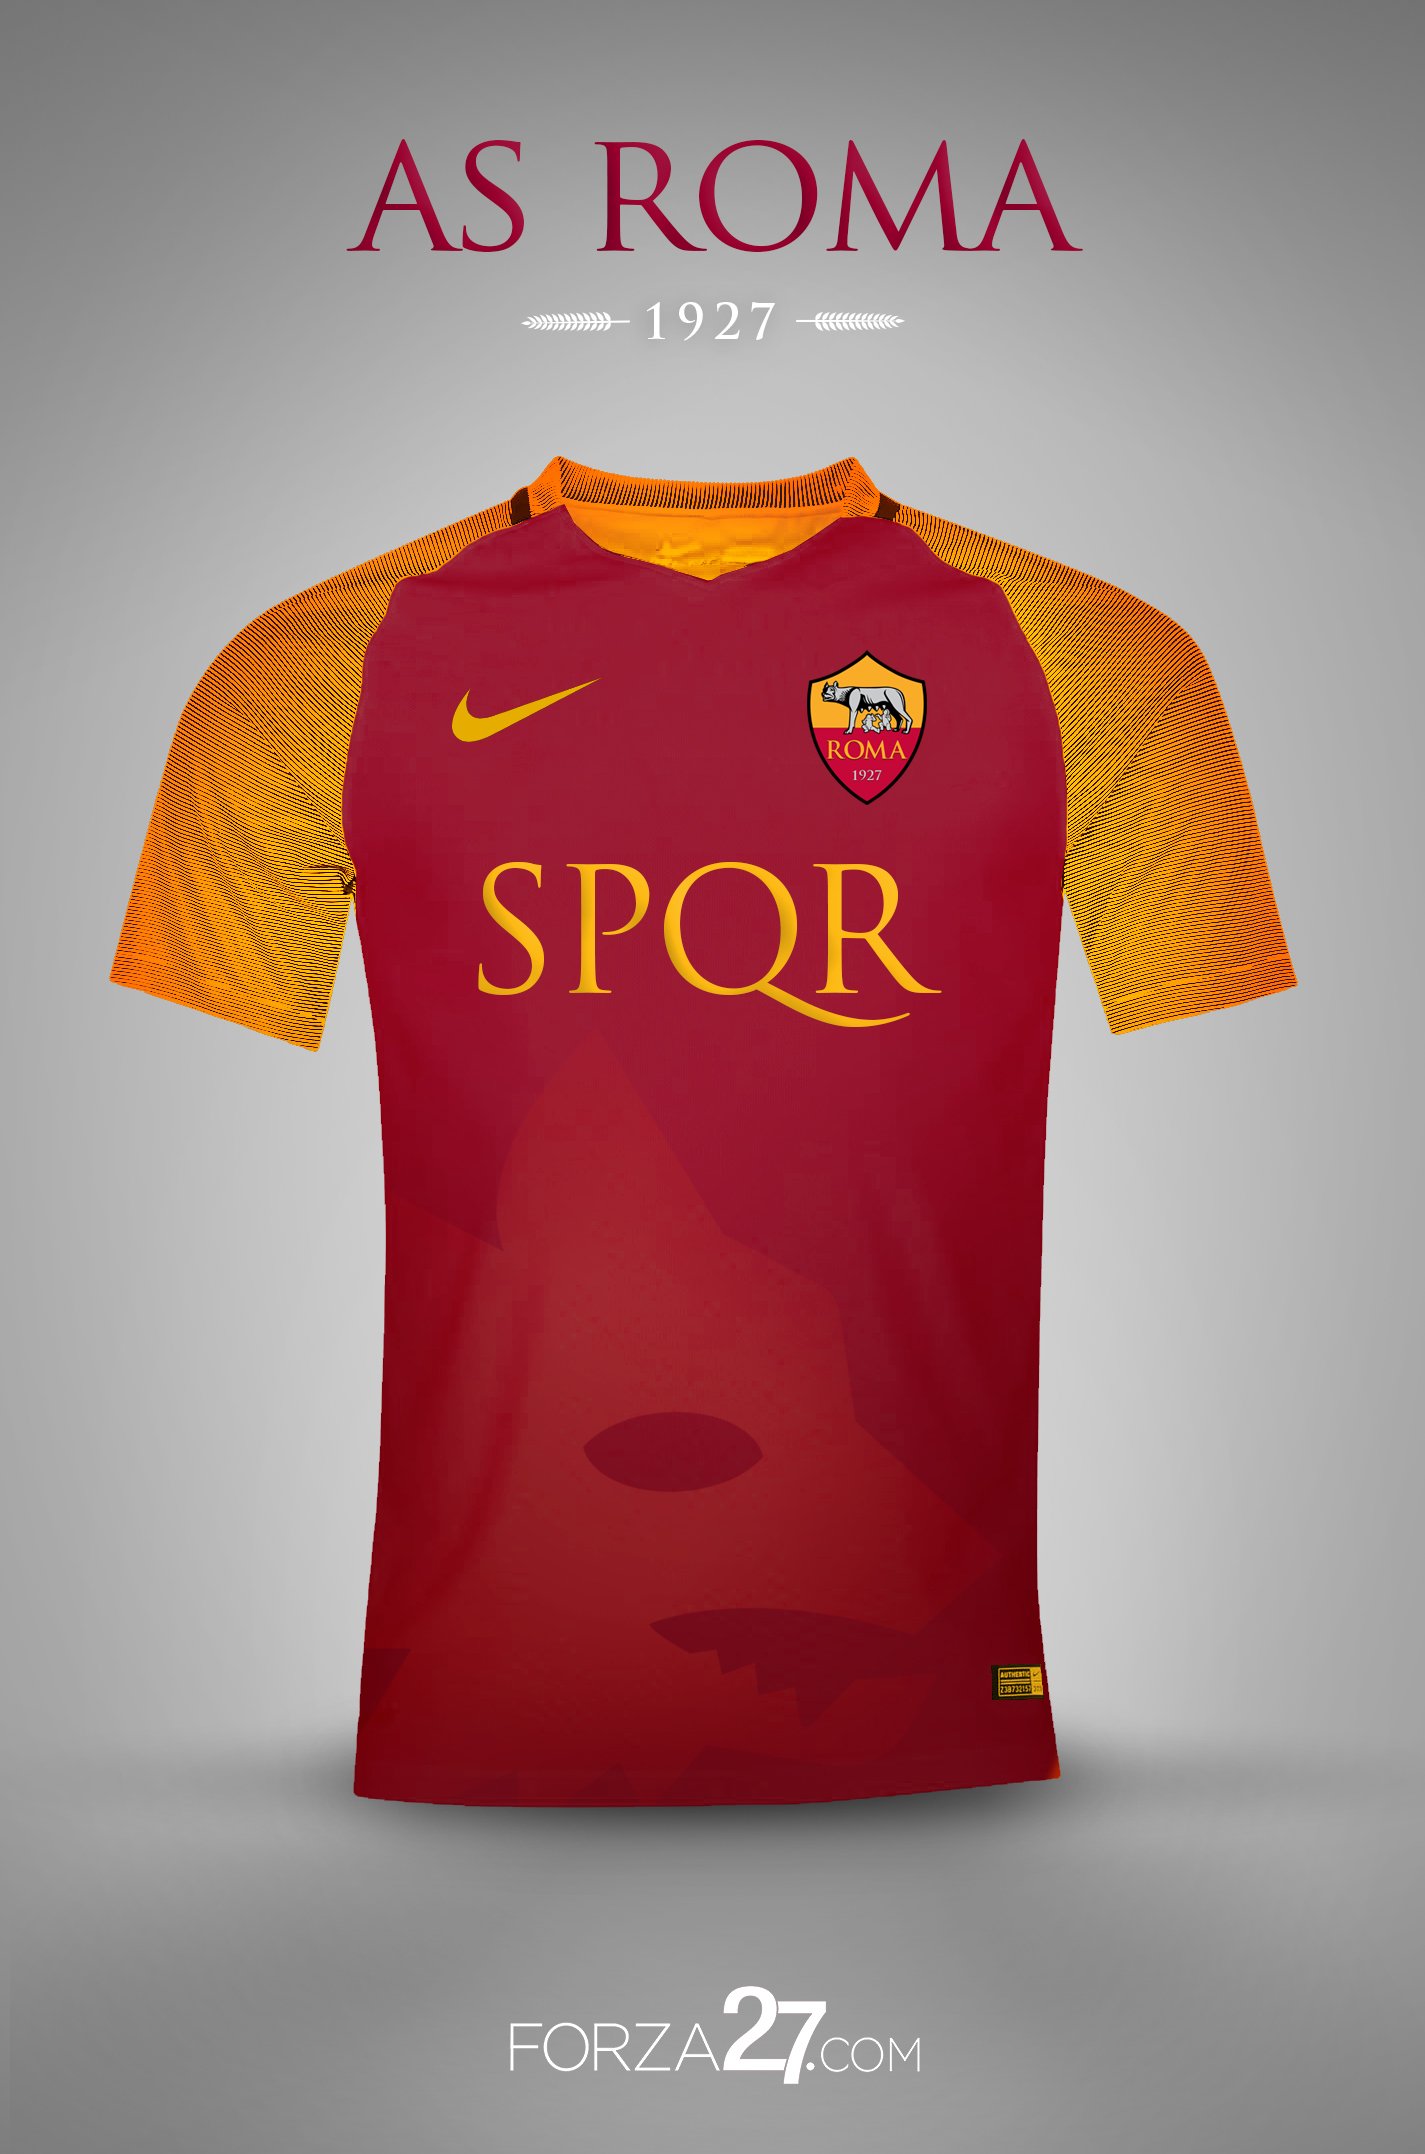 AS Roma Español on Twitter: "@Nike @Forza27_RS No. 3: Concepto de camiseta la diseñado Forza27 https://t.co/MRnLCziRHN" / Twitter